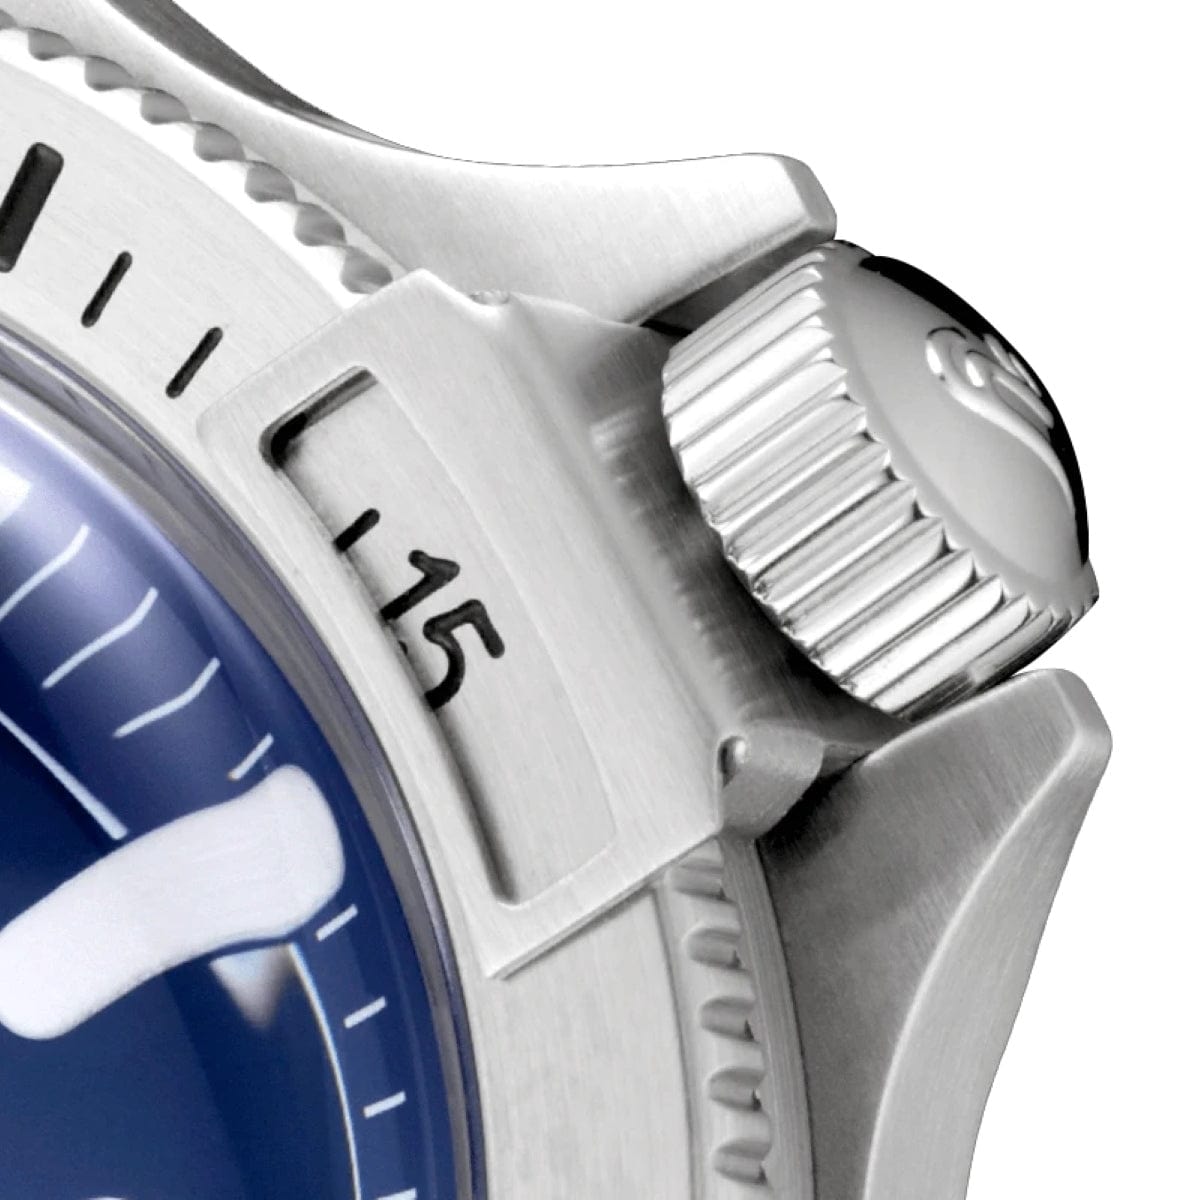 YEMA Superman Maxi Dial Watch - Steel Bezel - Blue Dial - 41mm Crown and Bezel Lock